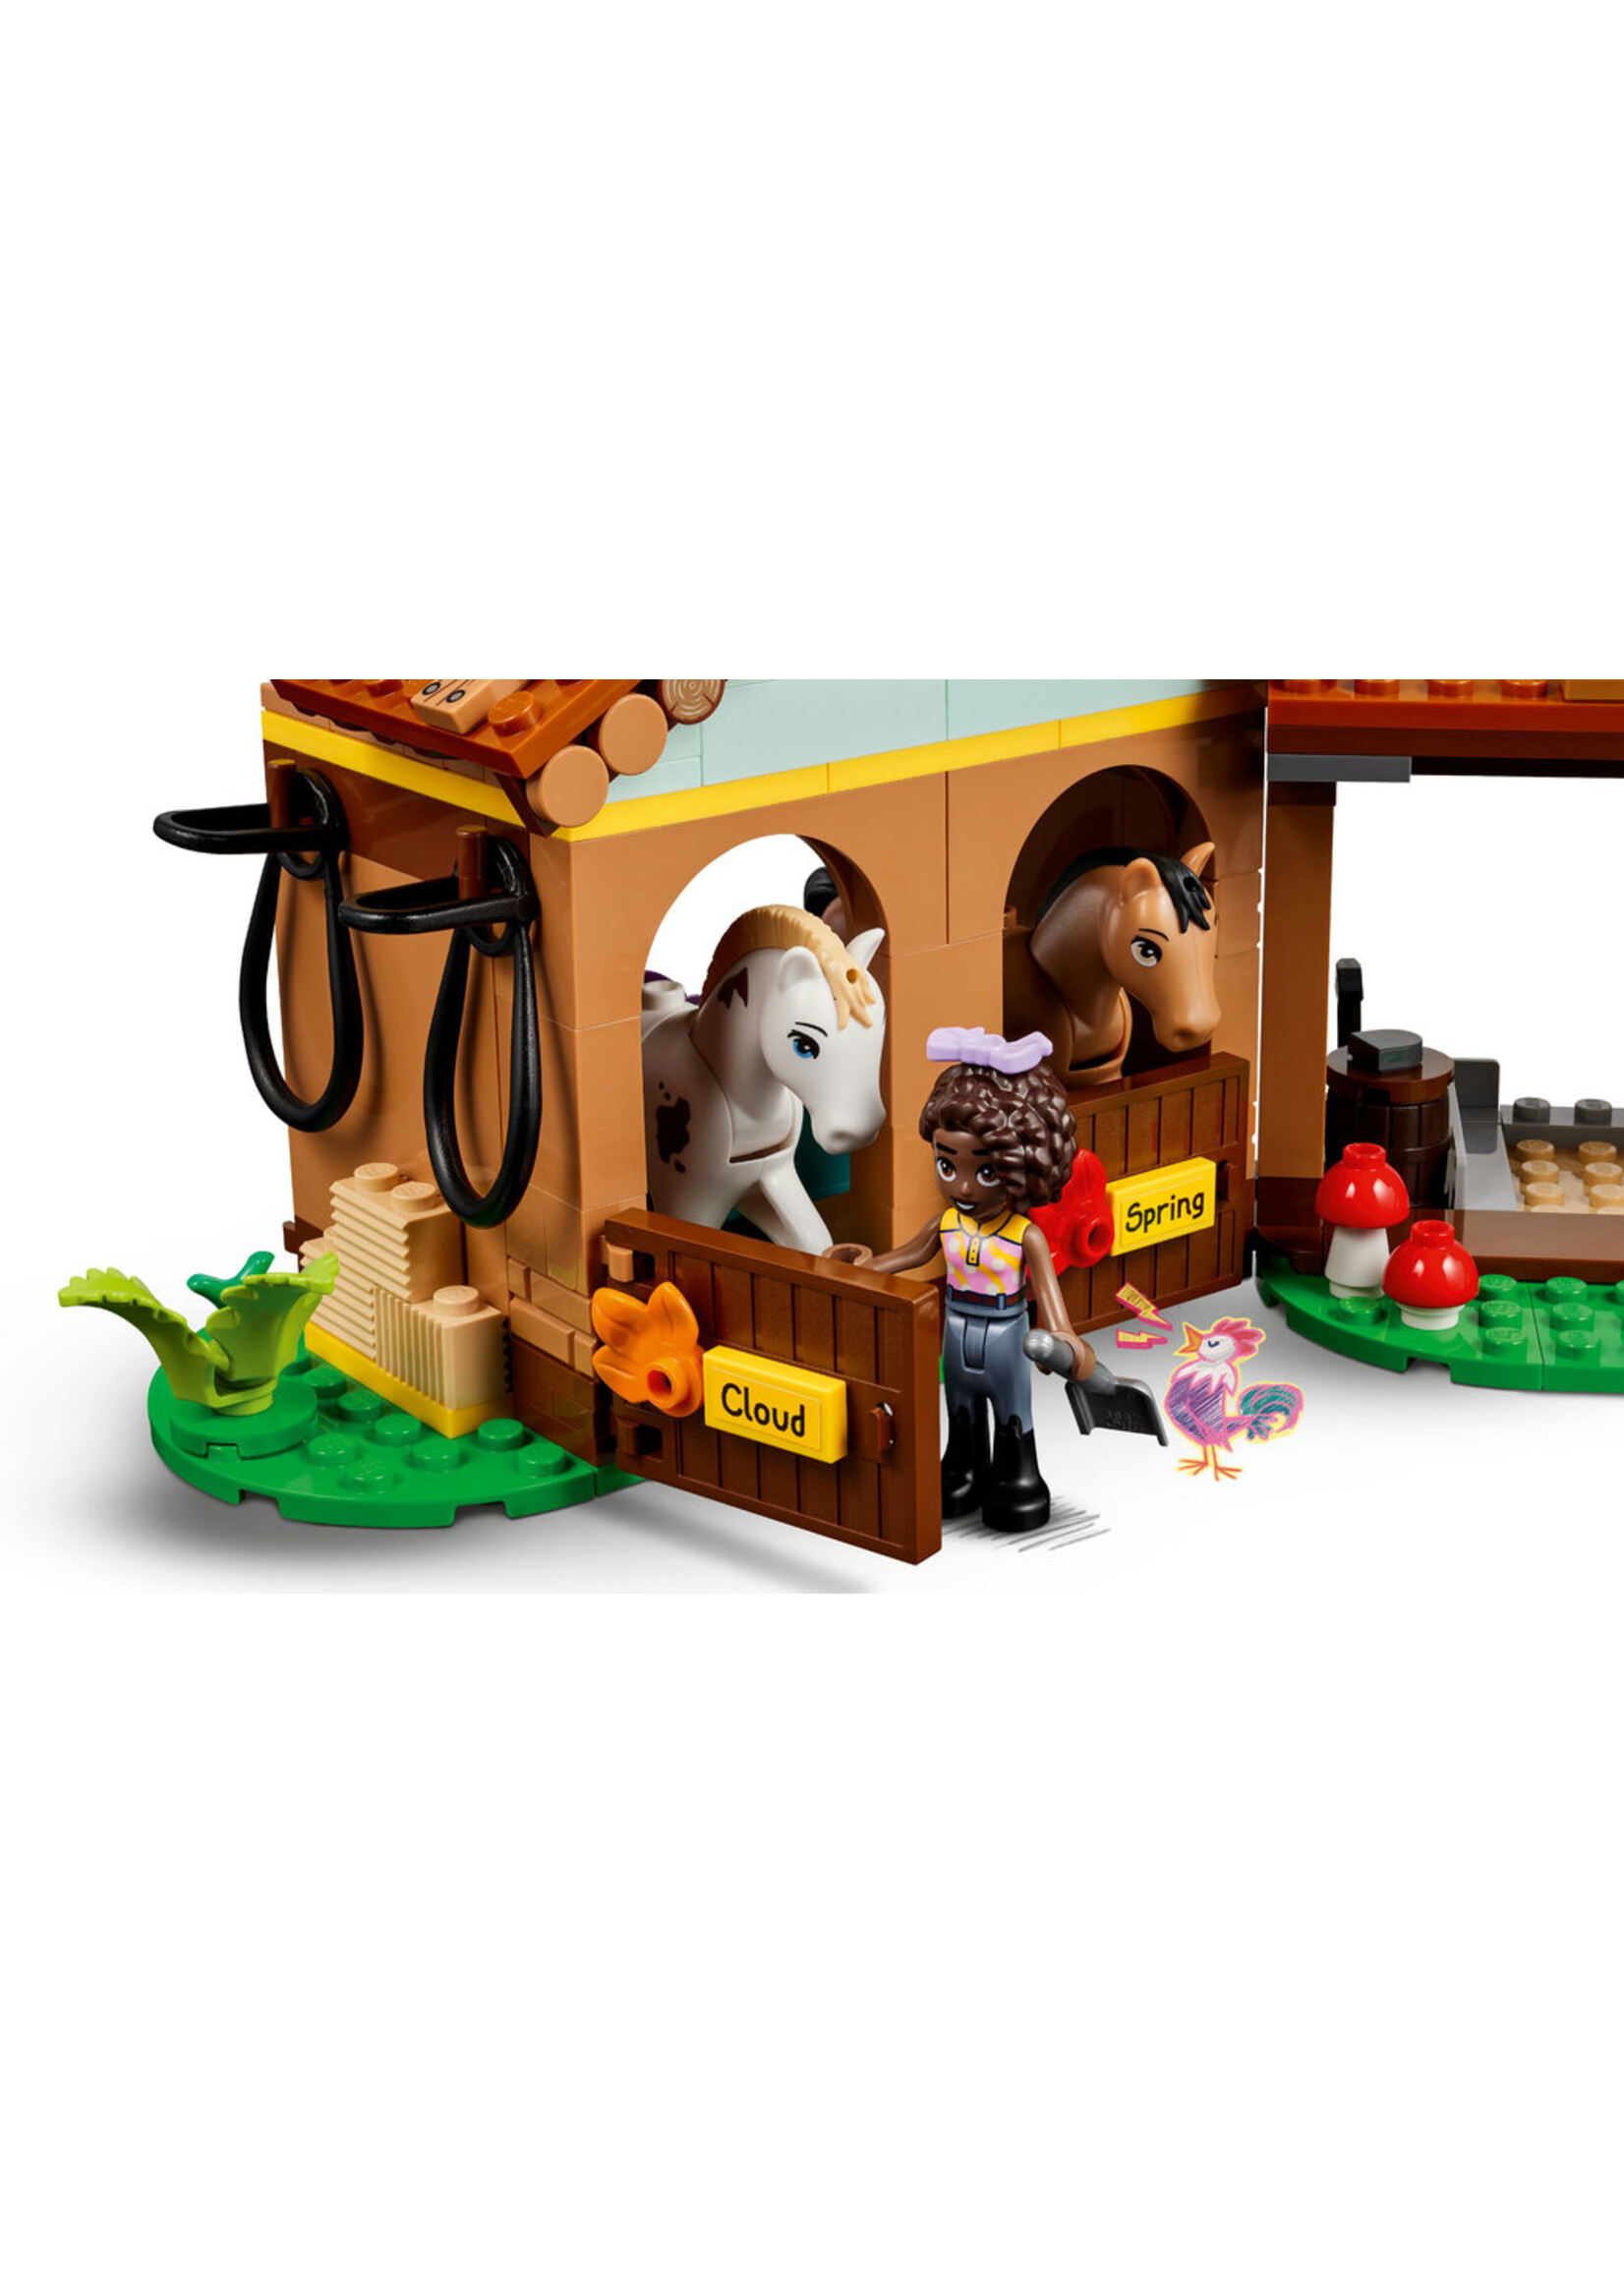 LEGO 41745 - Autumn's Horse Stable